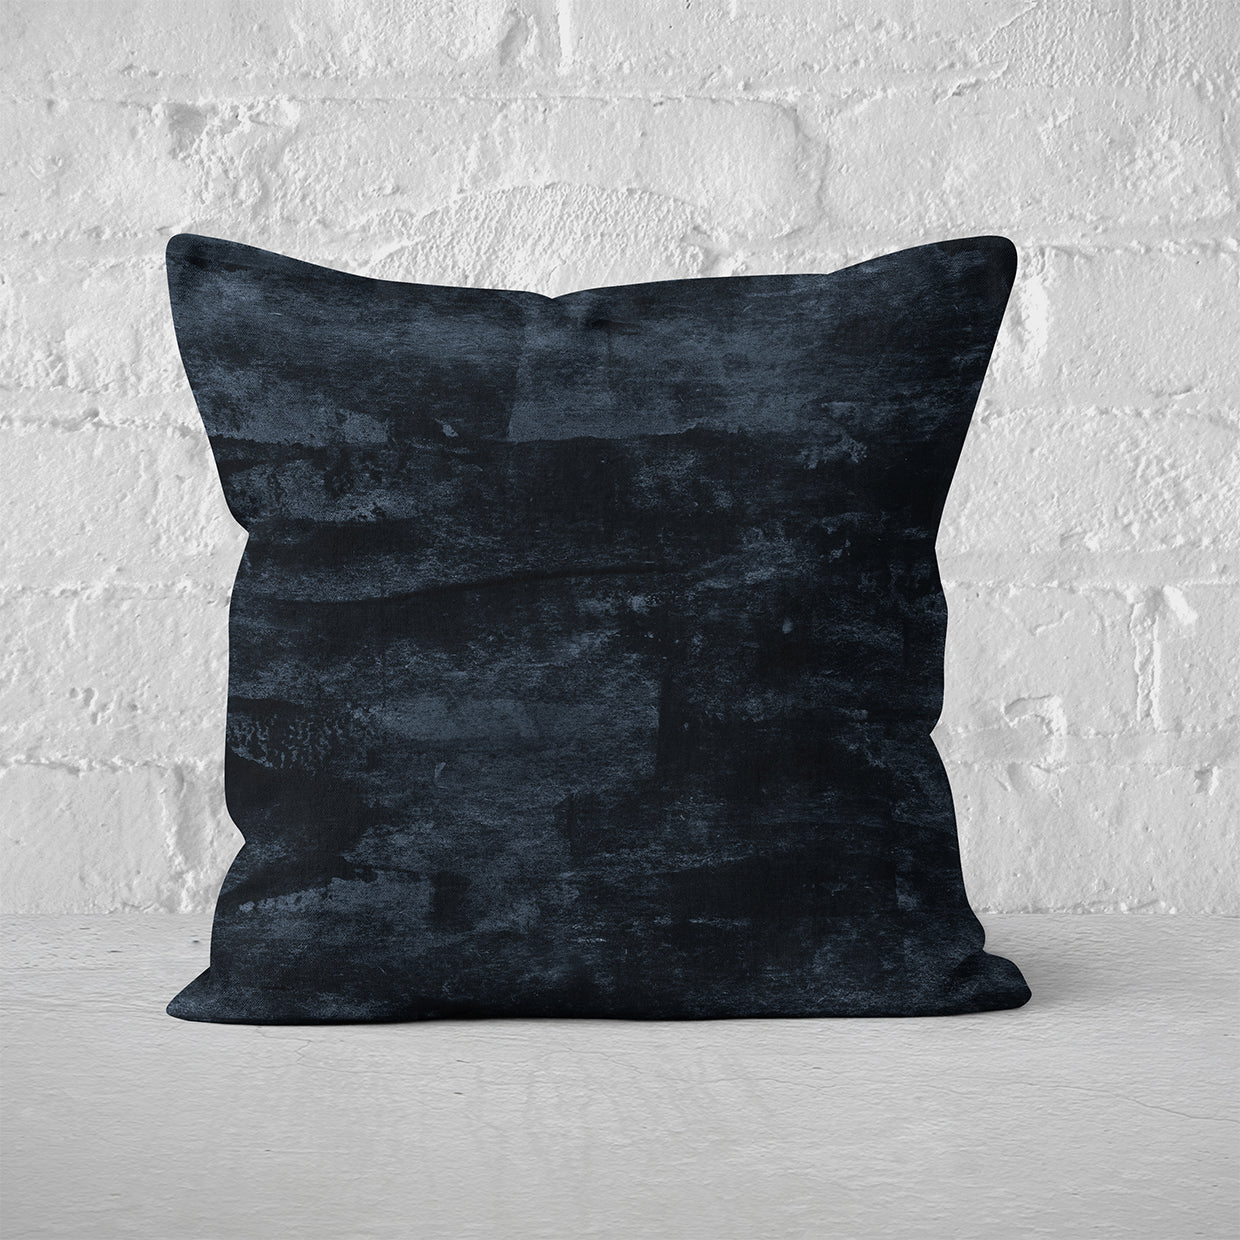 Pillow Cover Art Feature 'Satillite' - Black & Blue - Cotton Twill